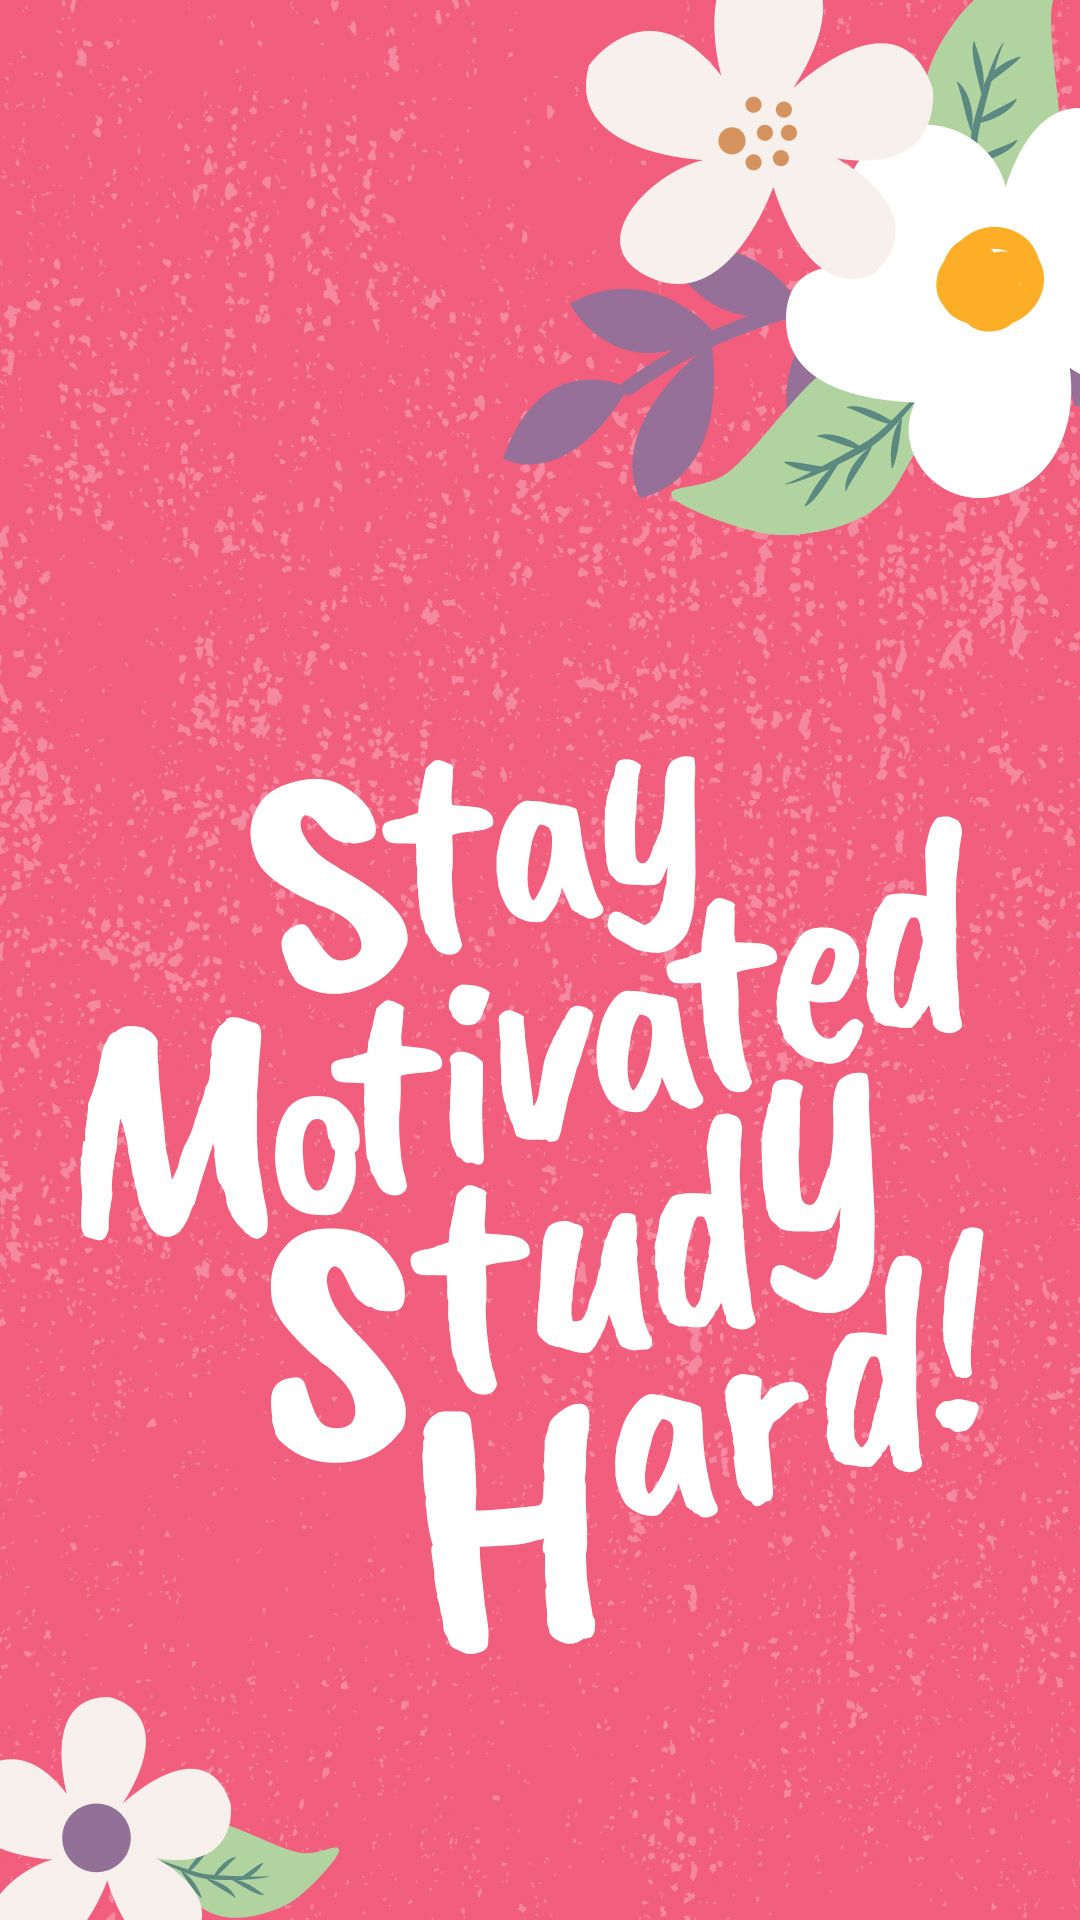 750 Study Motivation Pictures  Download Free Images on Unsplash